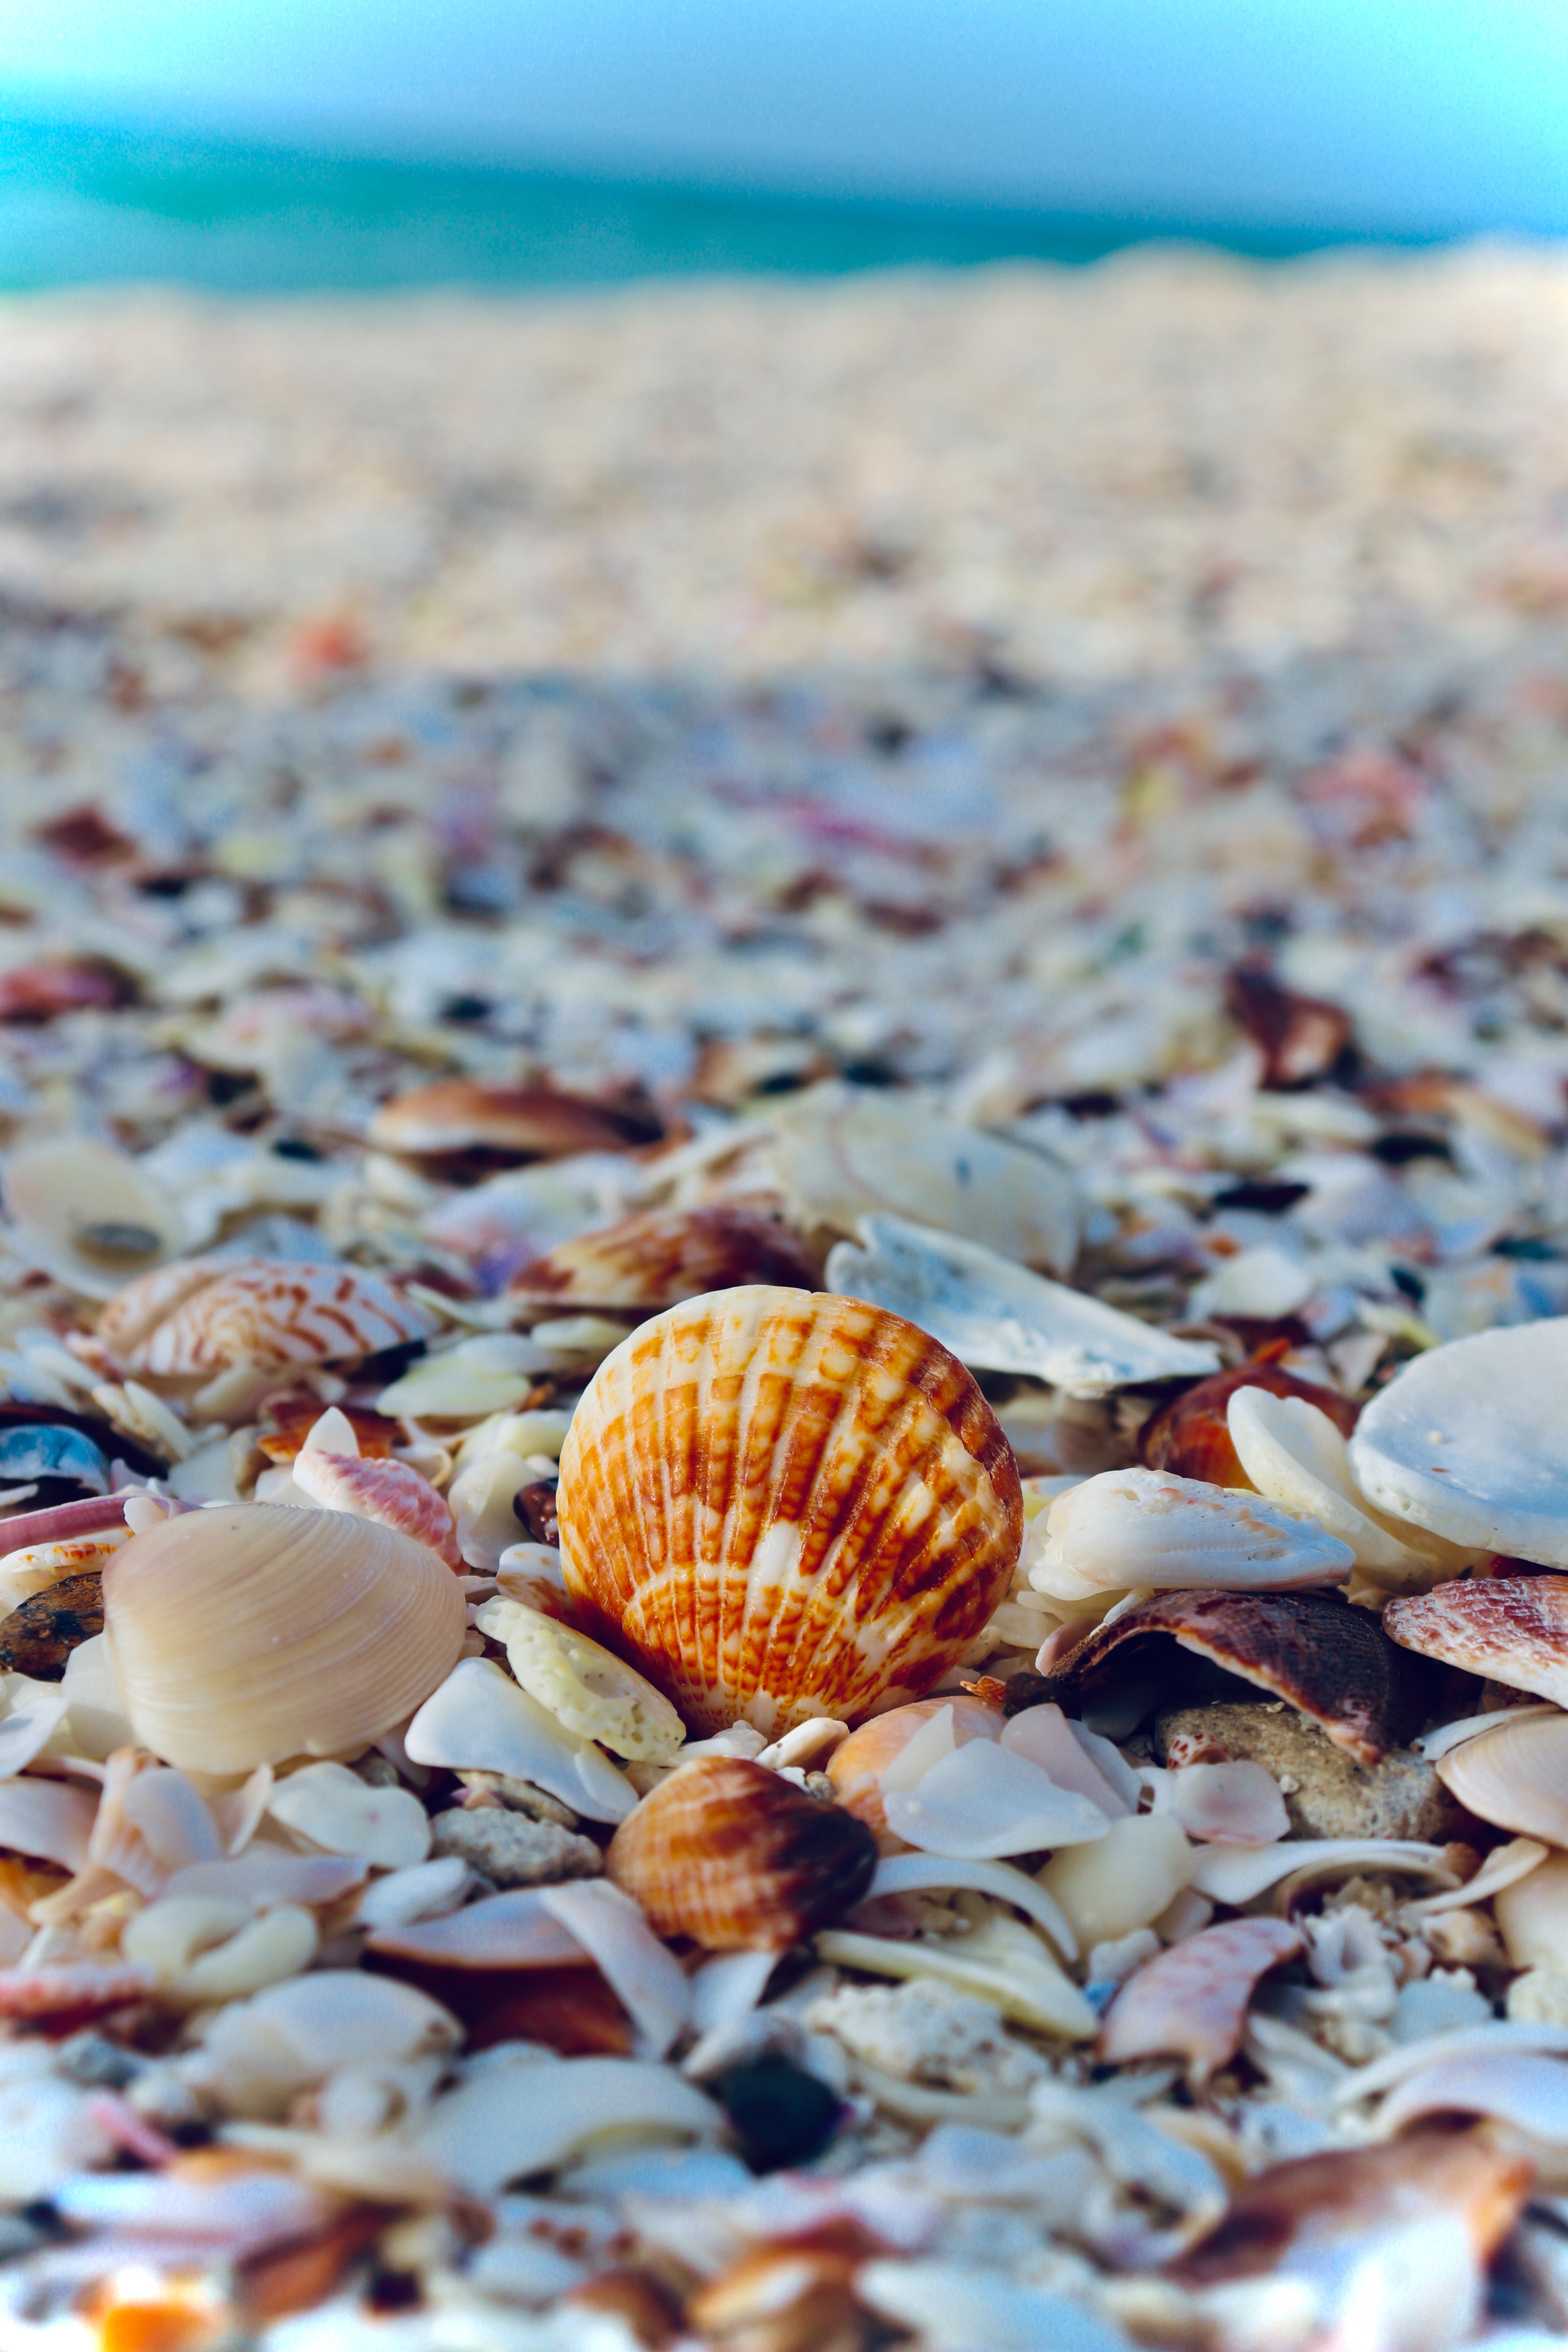 106116 descargar imagen naturaleza, mar, playa, conchas, relajación, reposo: fondos de pantalla y protectores de pantalla gratis